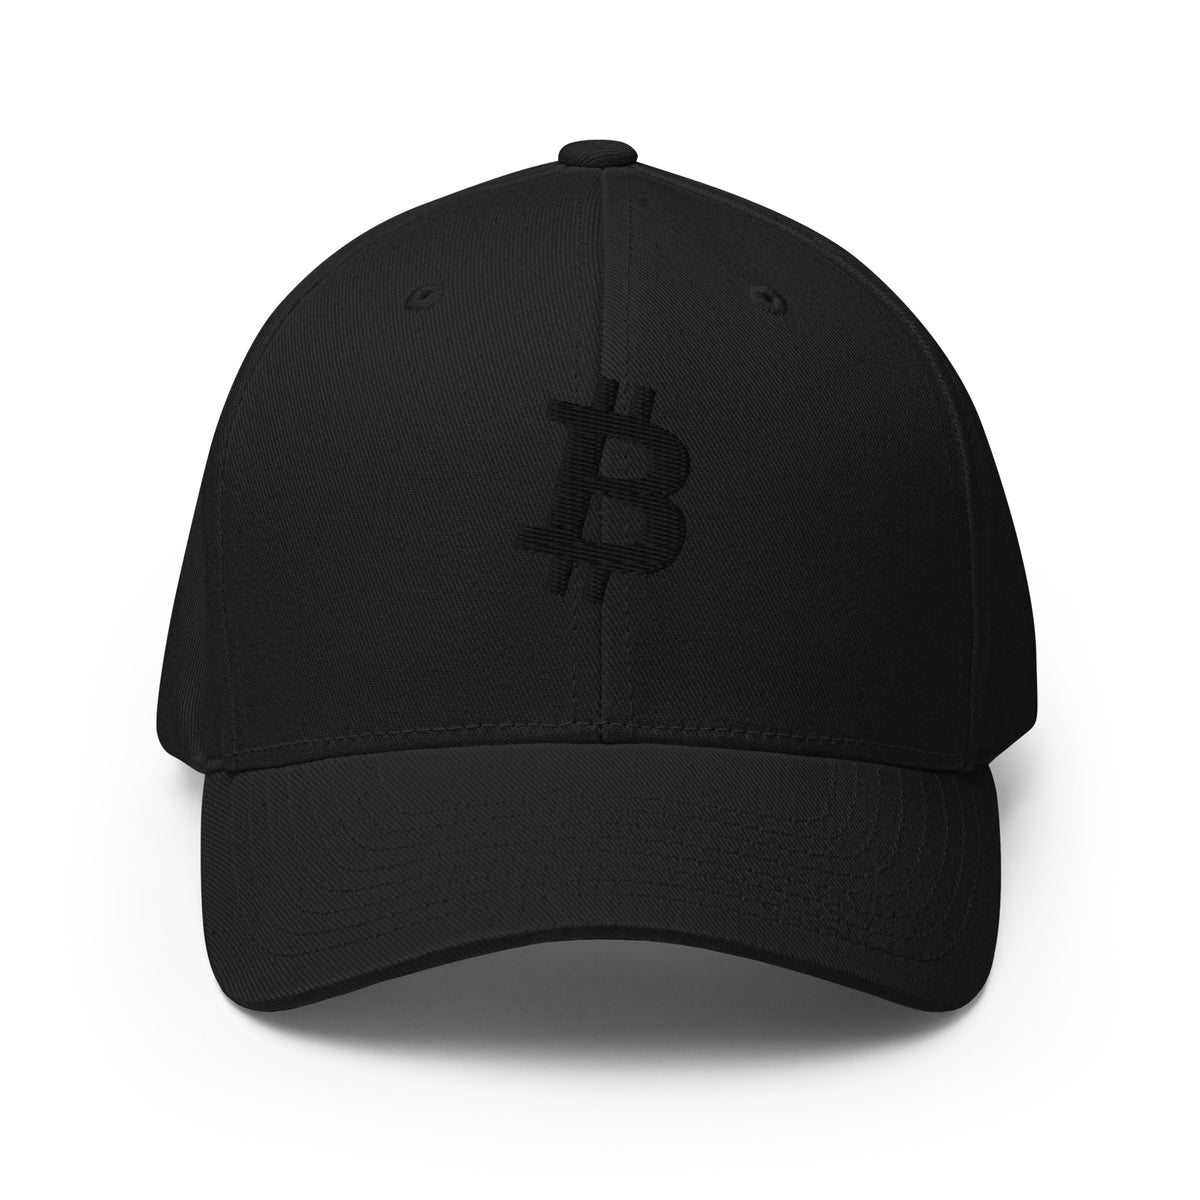 Bitcoin B (Black Embroidery) Flexfit Hat